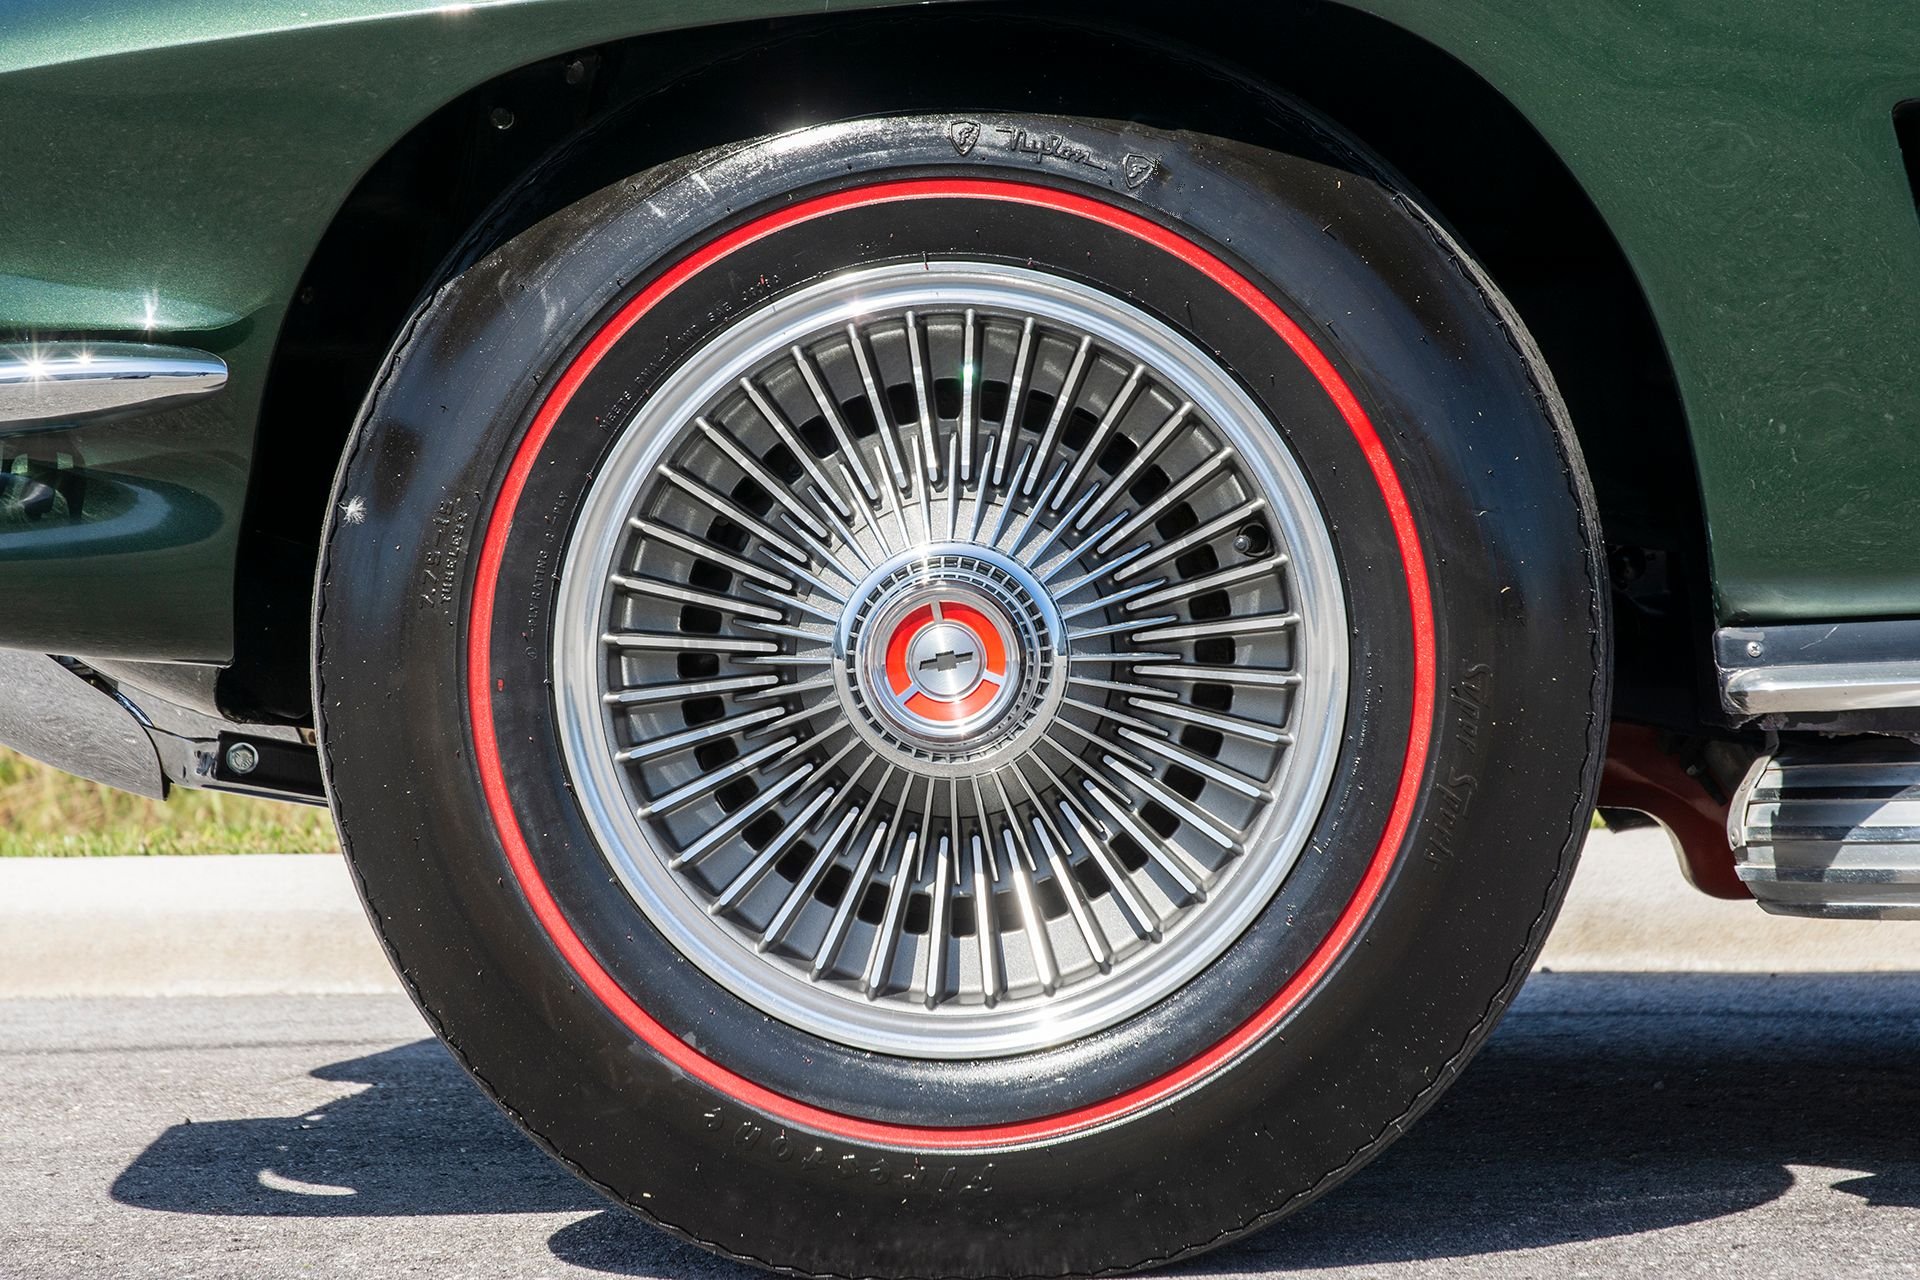 30134034 | 1967 Chevrolet Corvette 427/435 H.P. Coupe | Pinnacle Motorcars